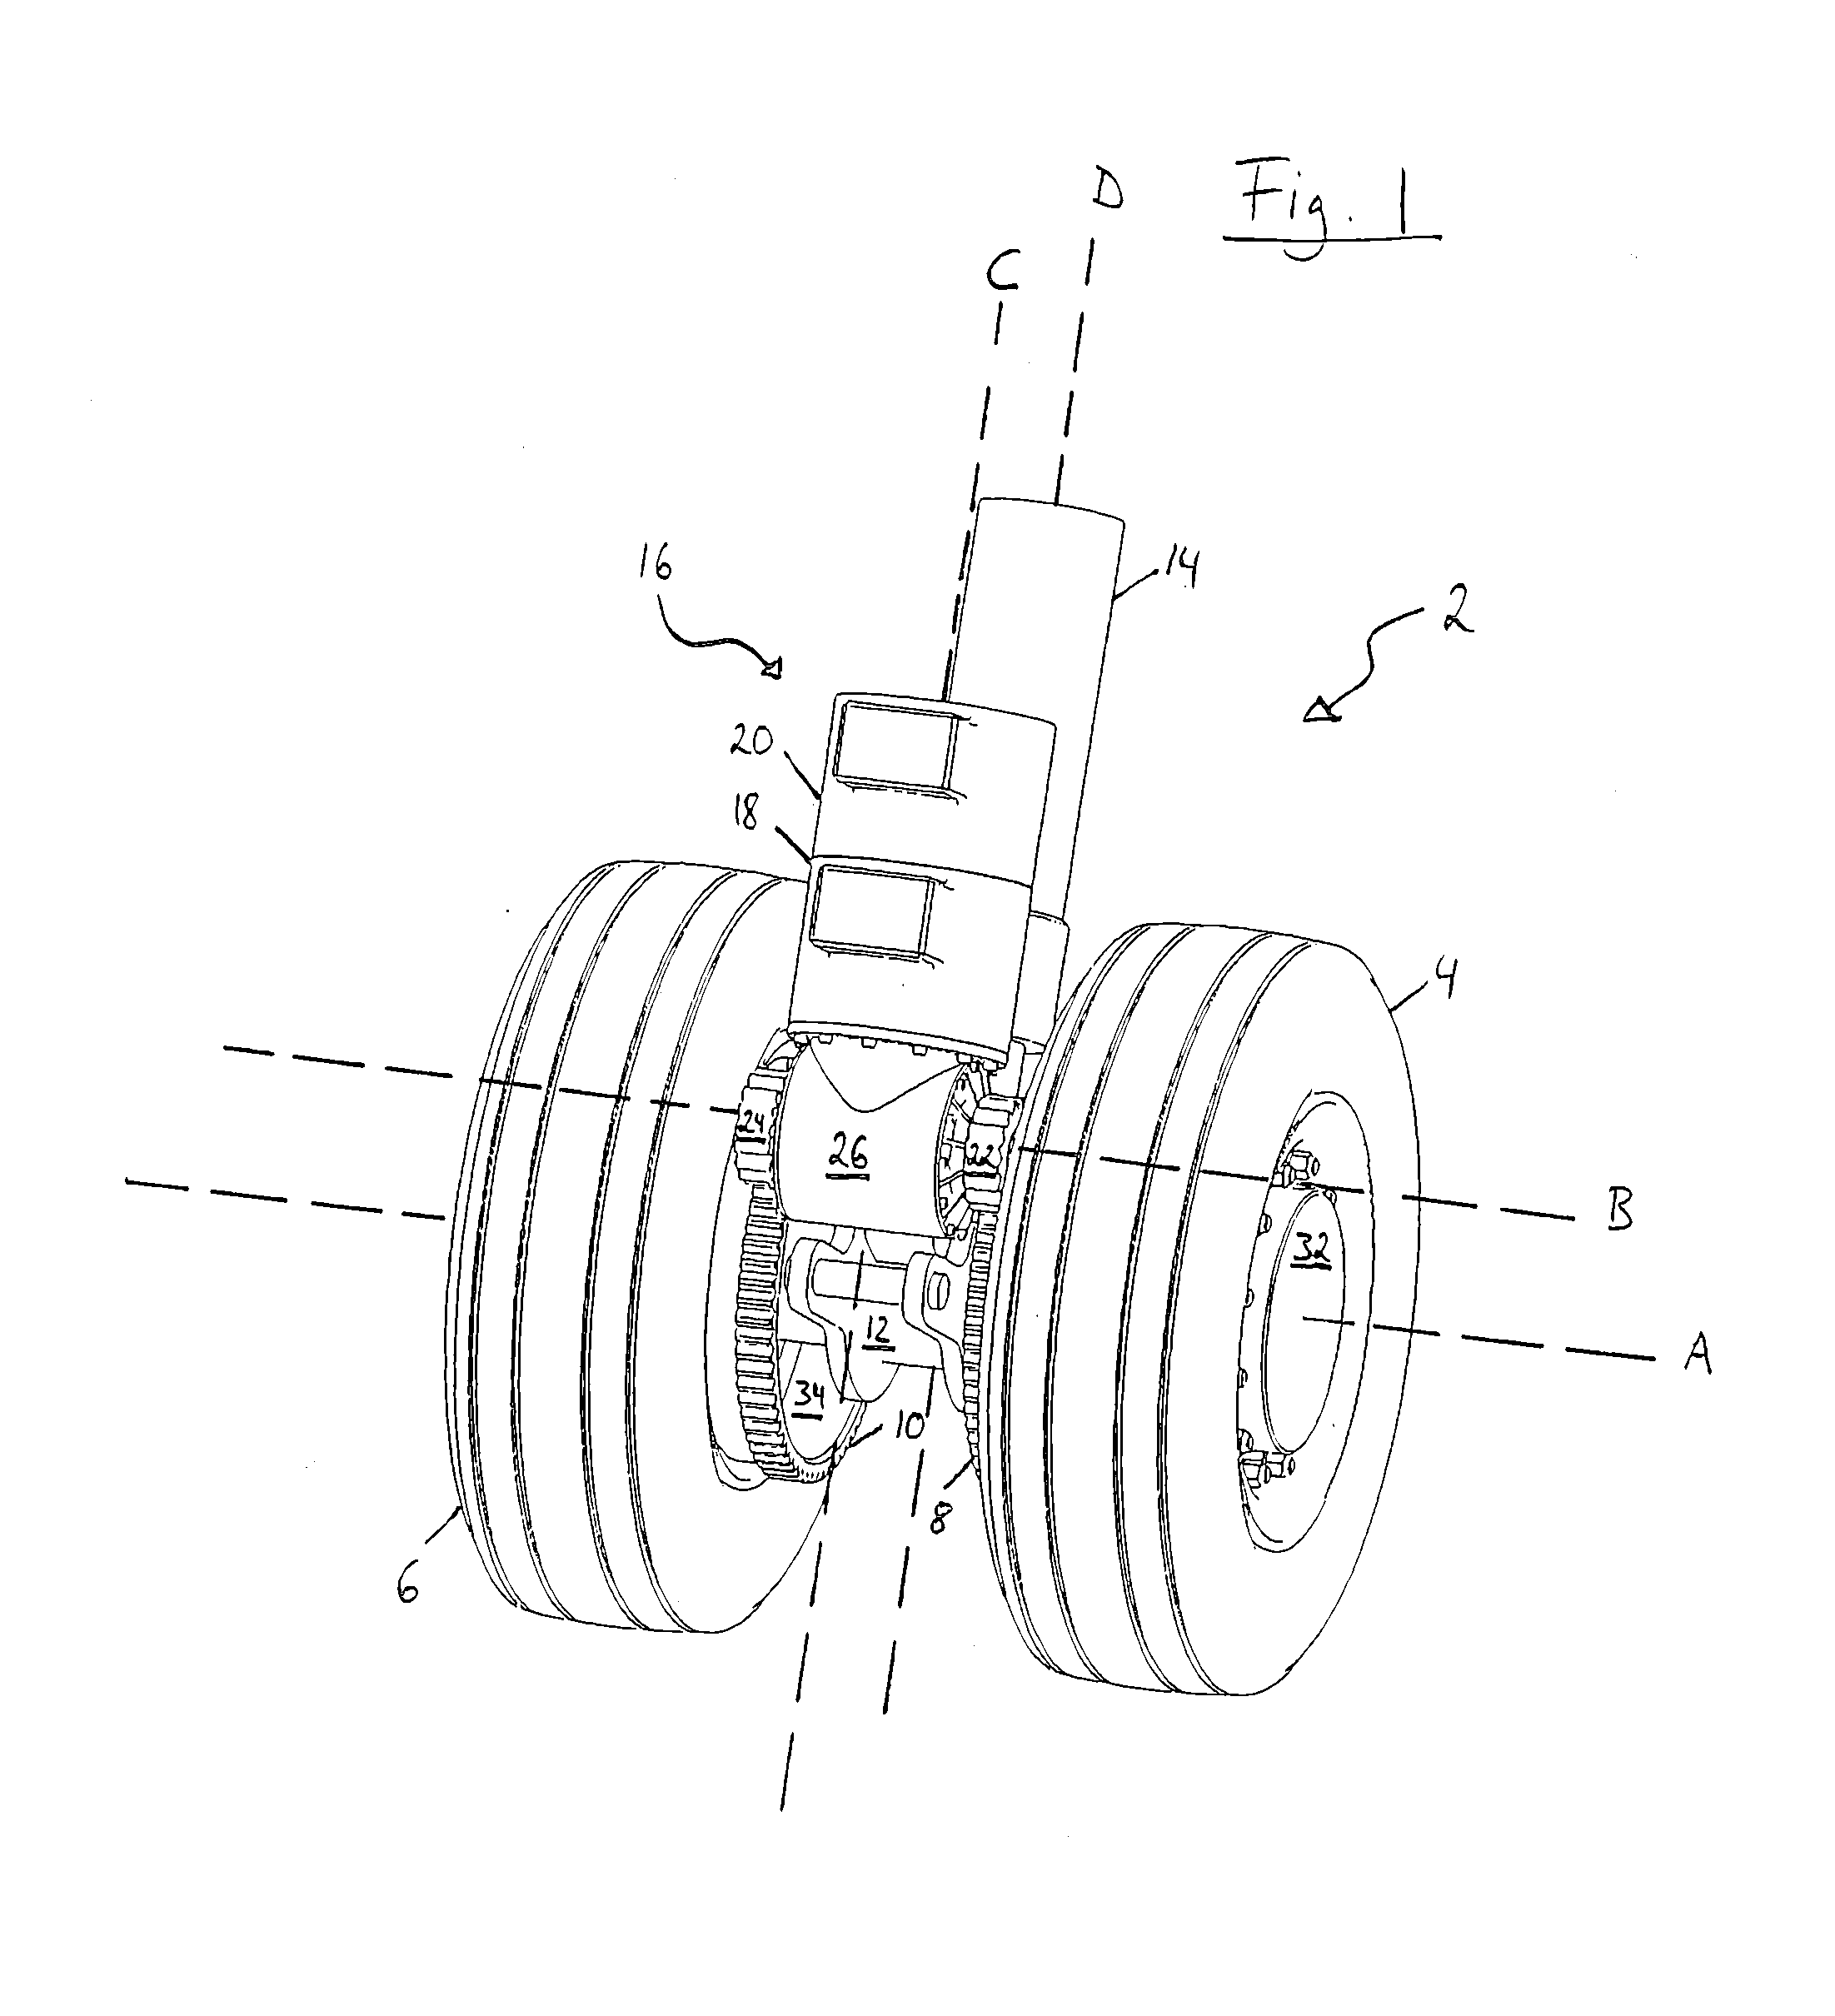 Drive unit for aircraft running gear wheels